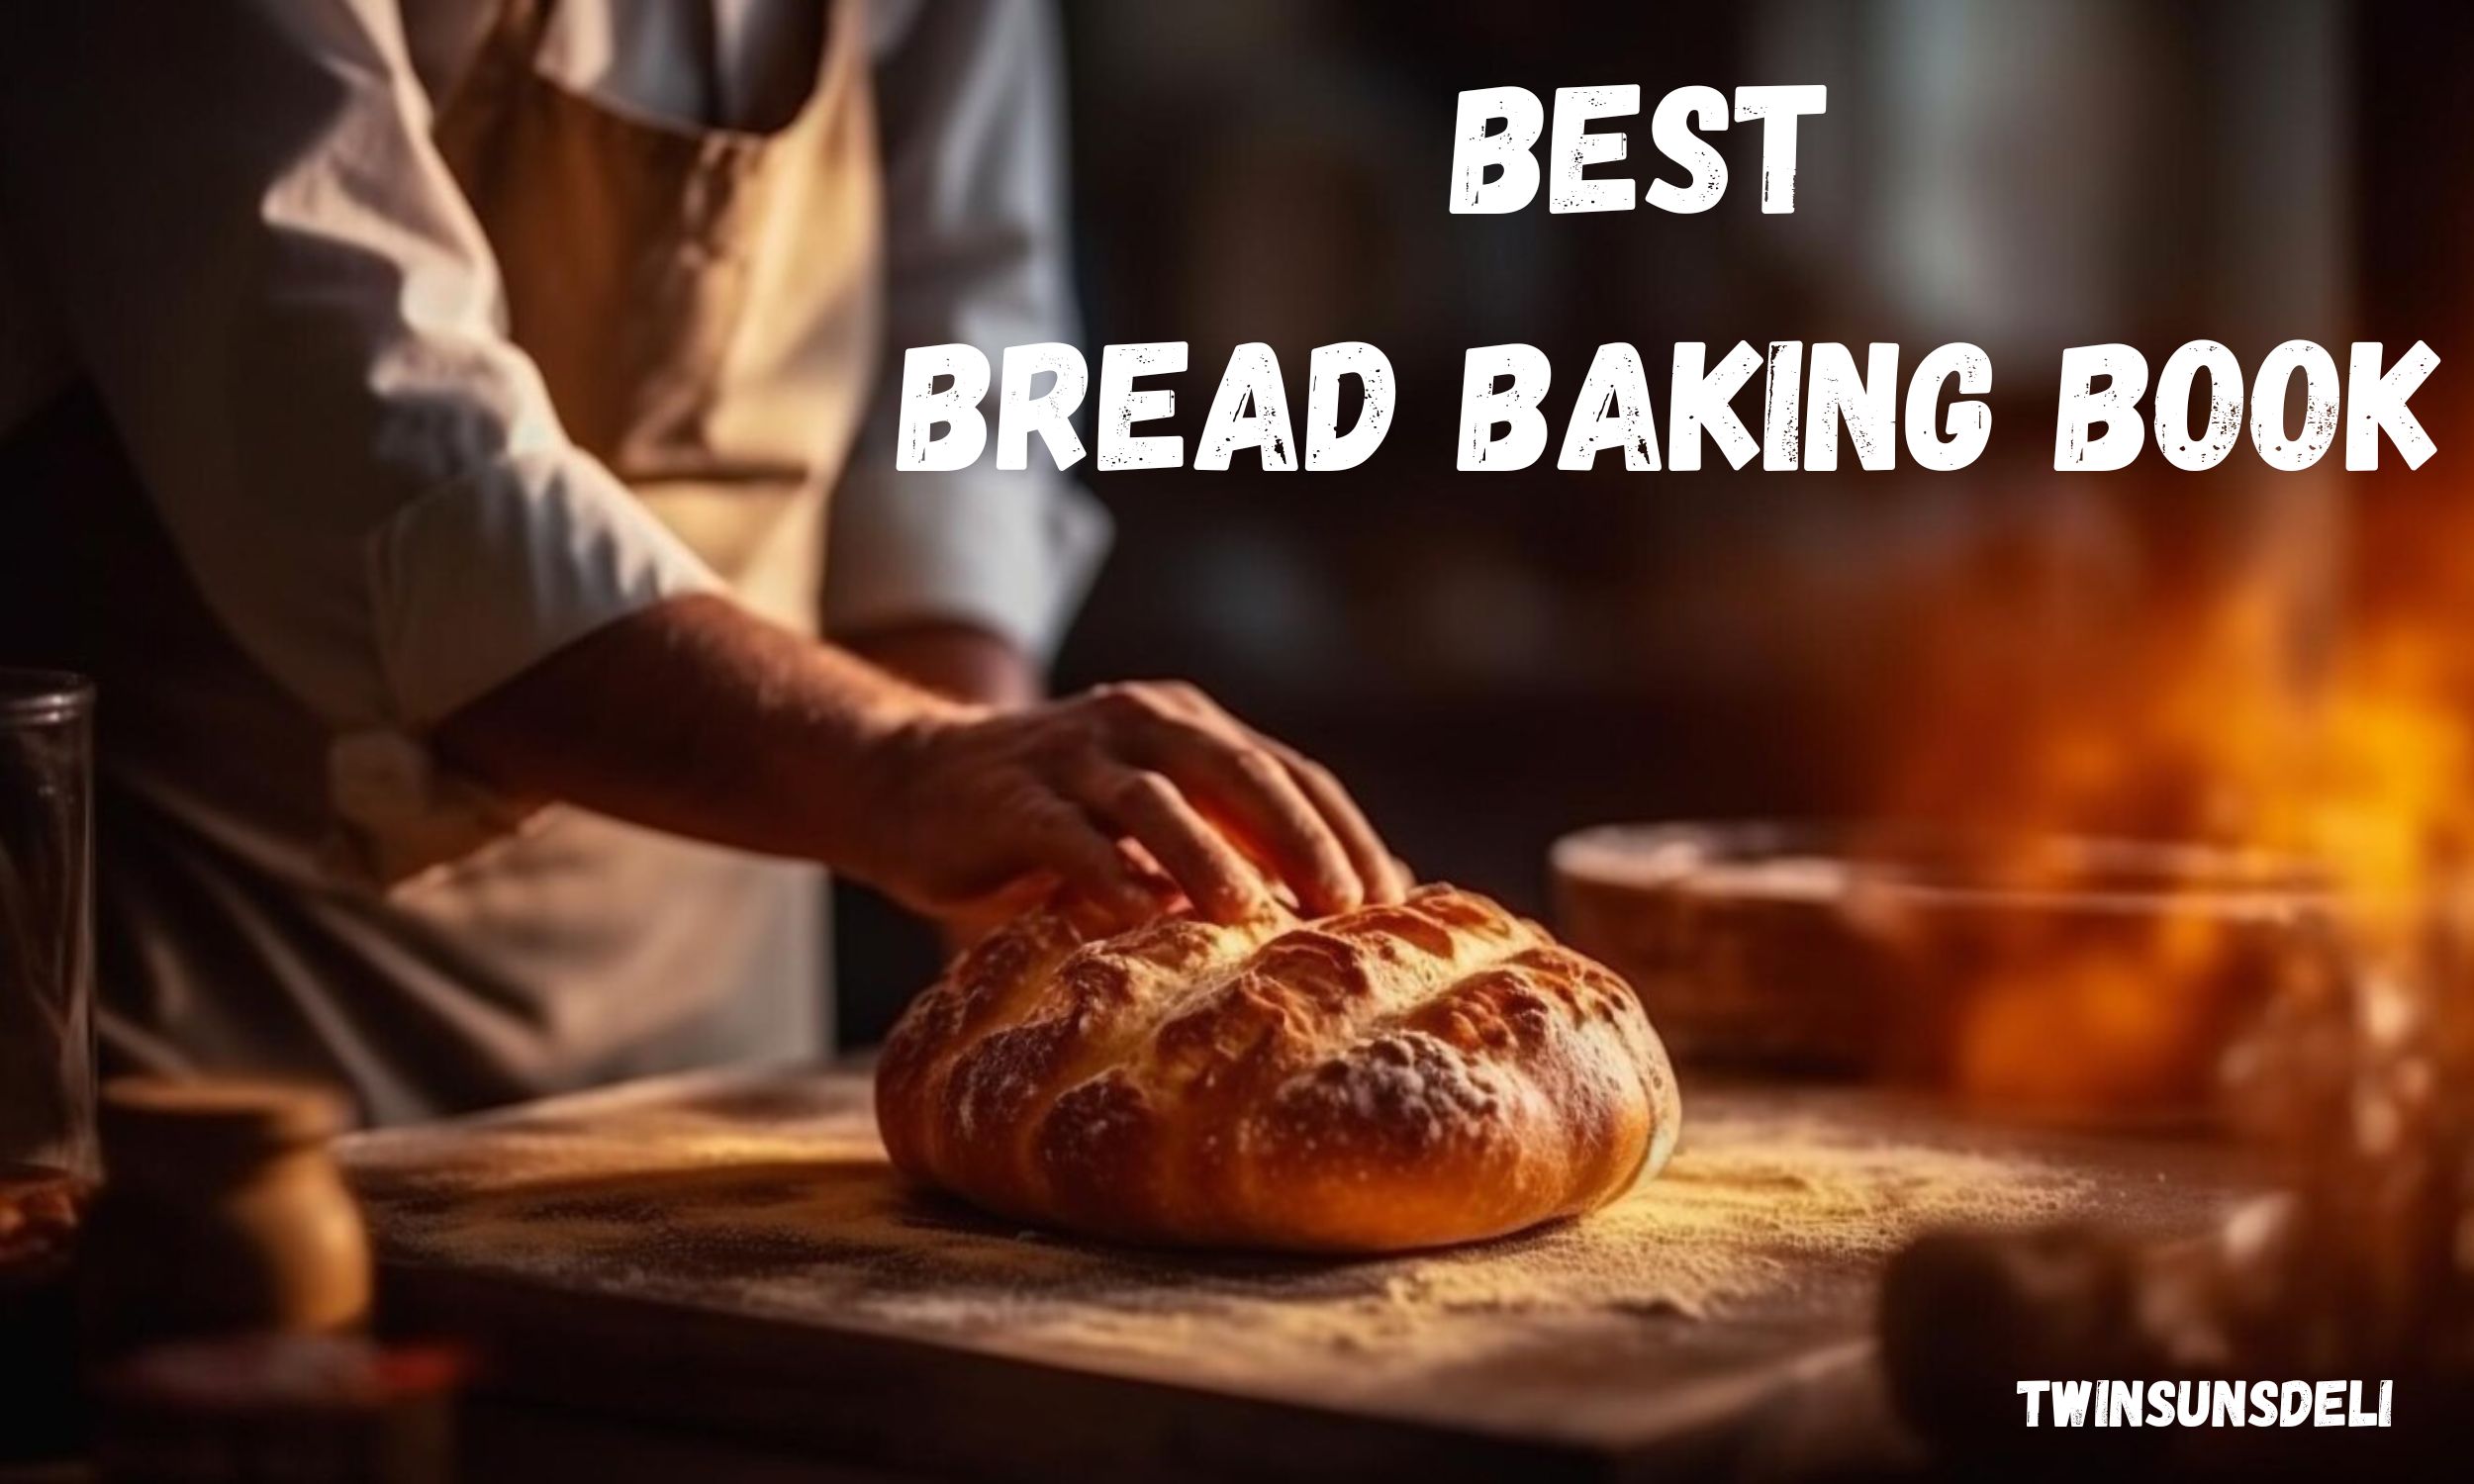 Best bread baking book